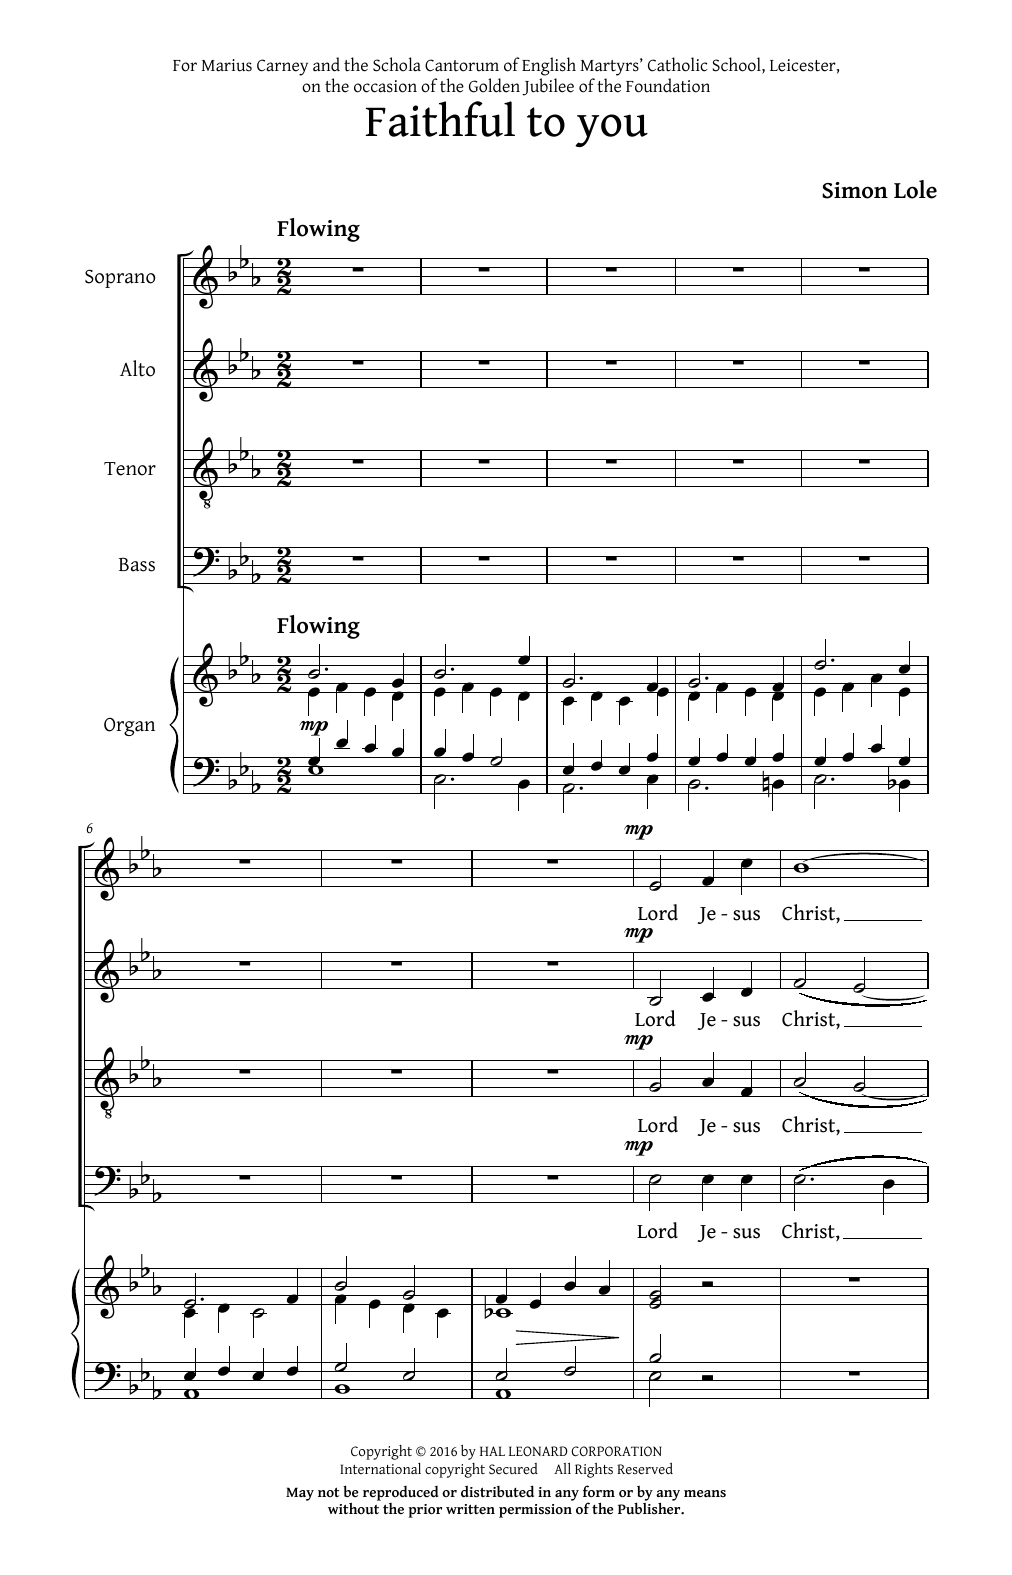 Simon Lole Faithful To You sheet music notes and chords arranged for SATB Choir